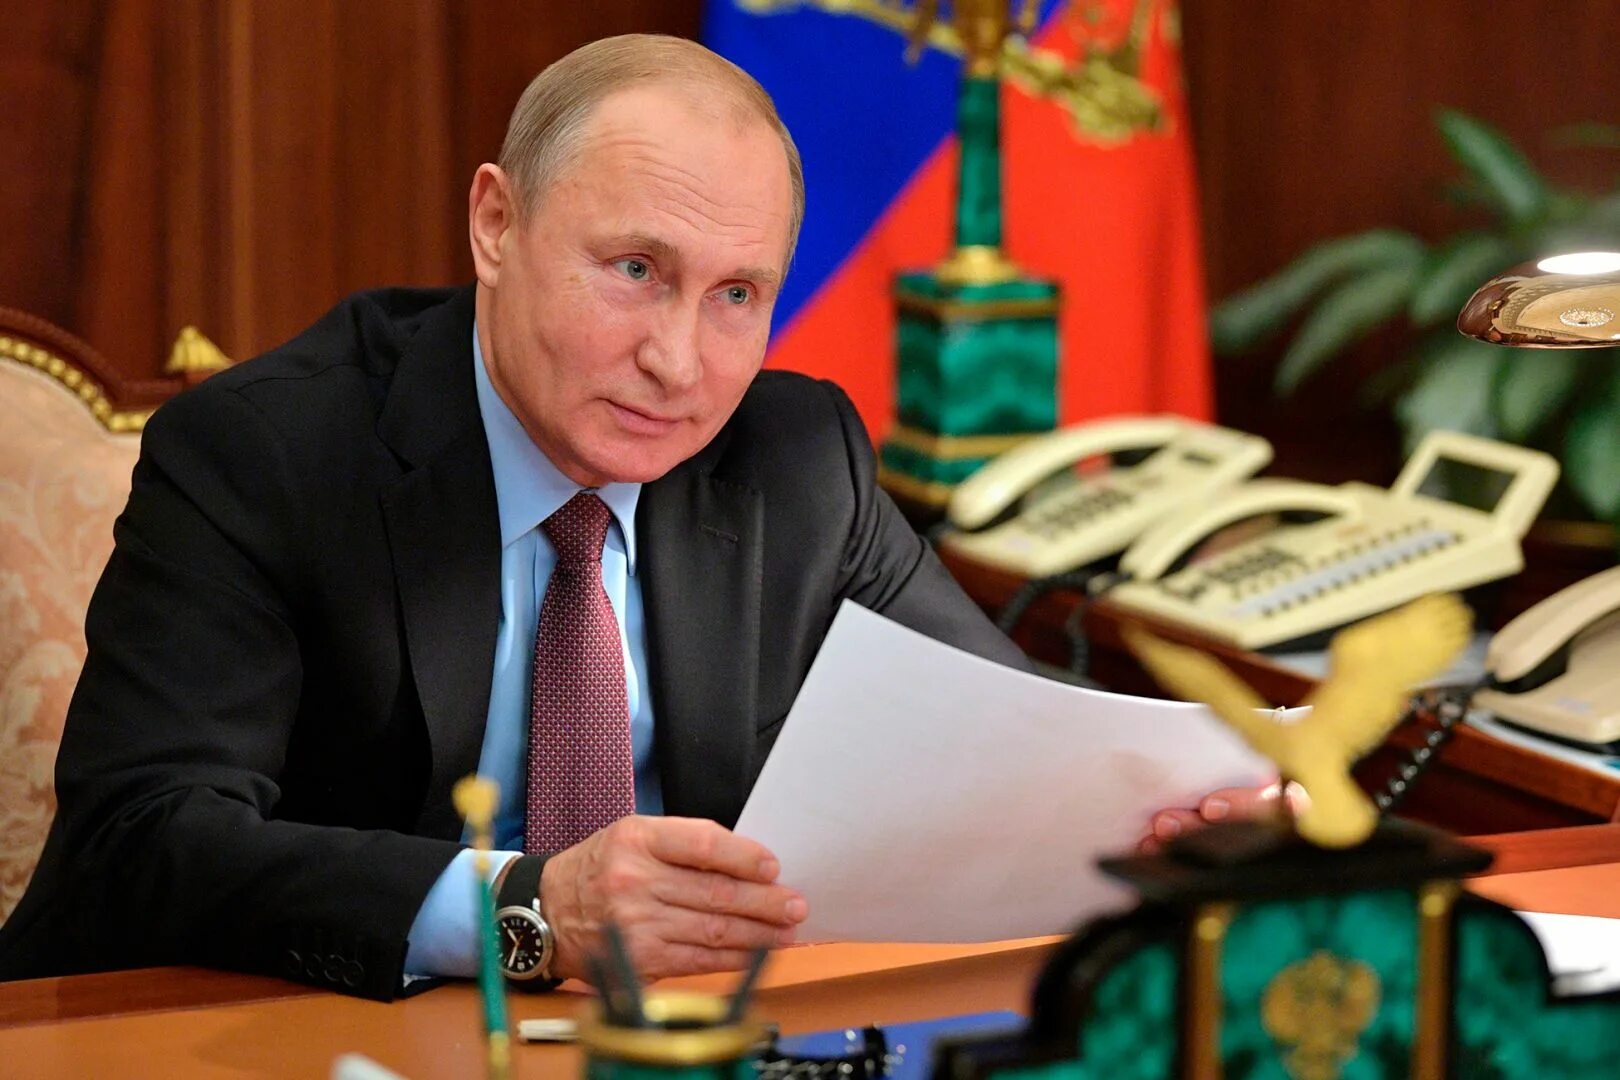 Сайт президента. Путин за столом. Путин фото хорошего качества. Путин за столом в кабинете. Фото Путина в хорошем качестве для кабинета.